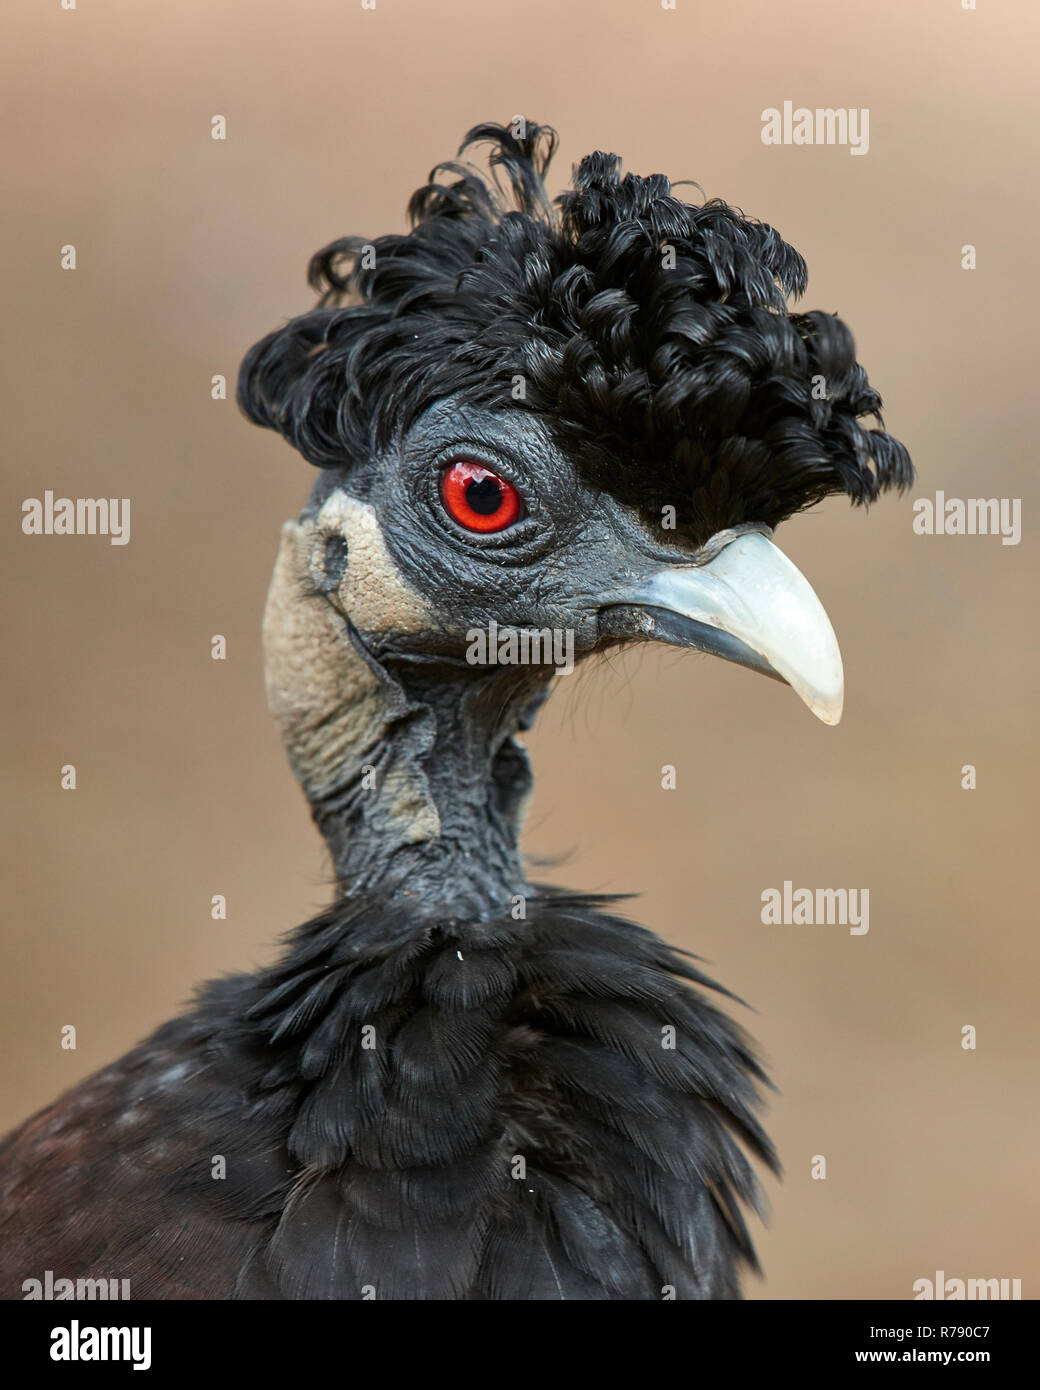 Crested Guineafowl (Guttera pucherani) - retrato mostrando cresta de rizado plumas negras en la coronilla de la cabeza Foto de stock